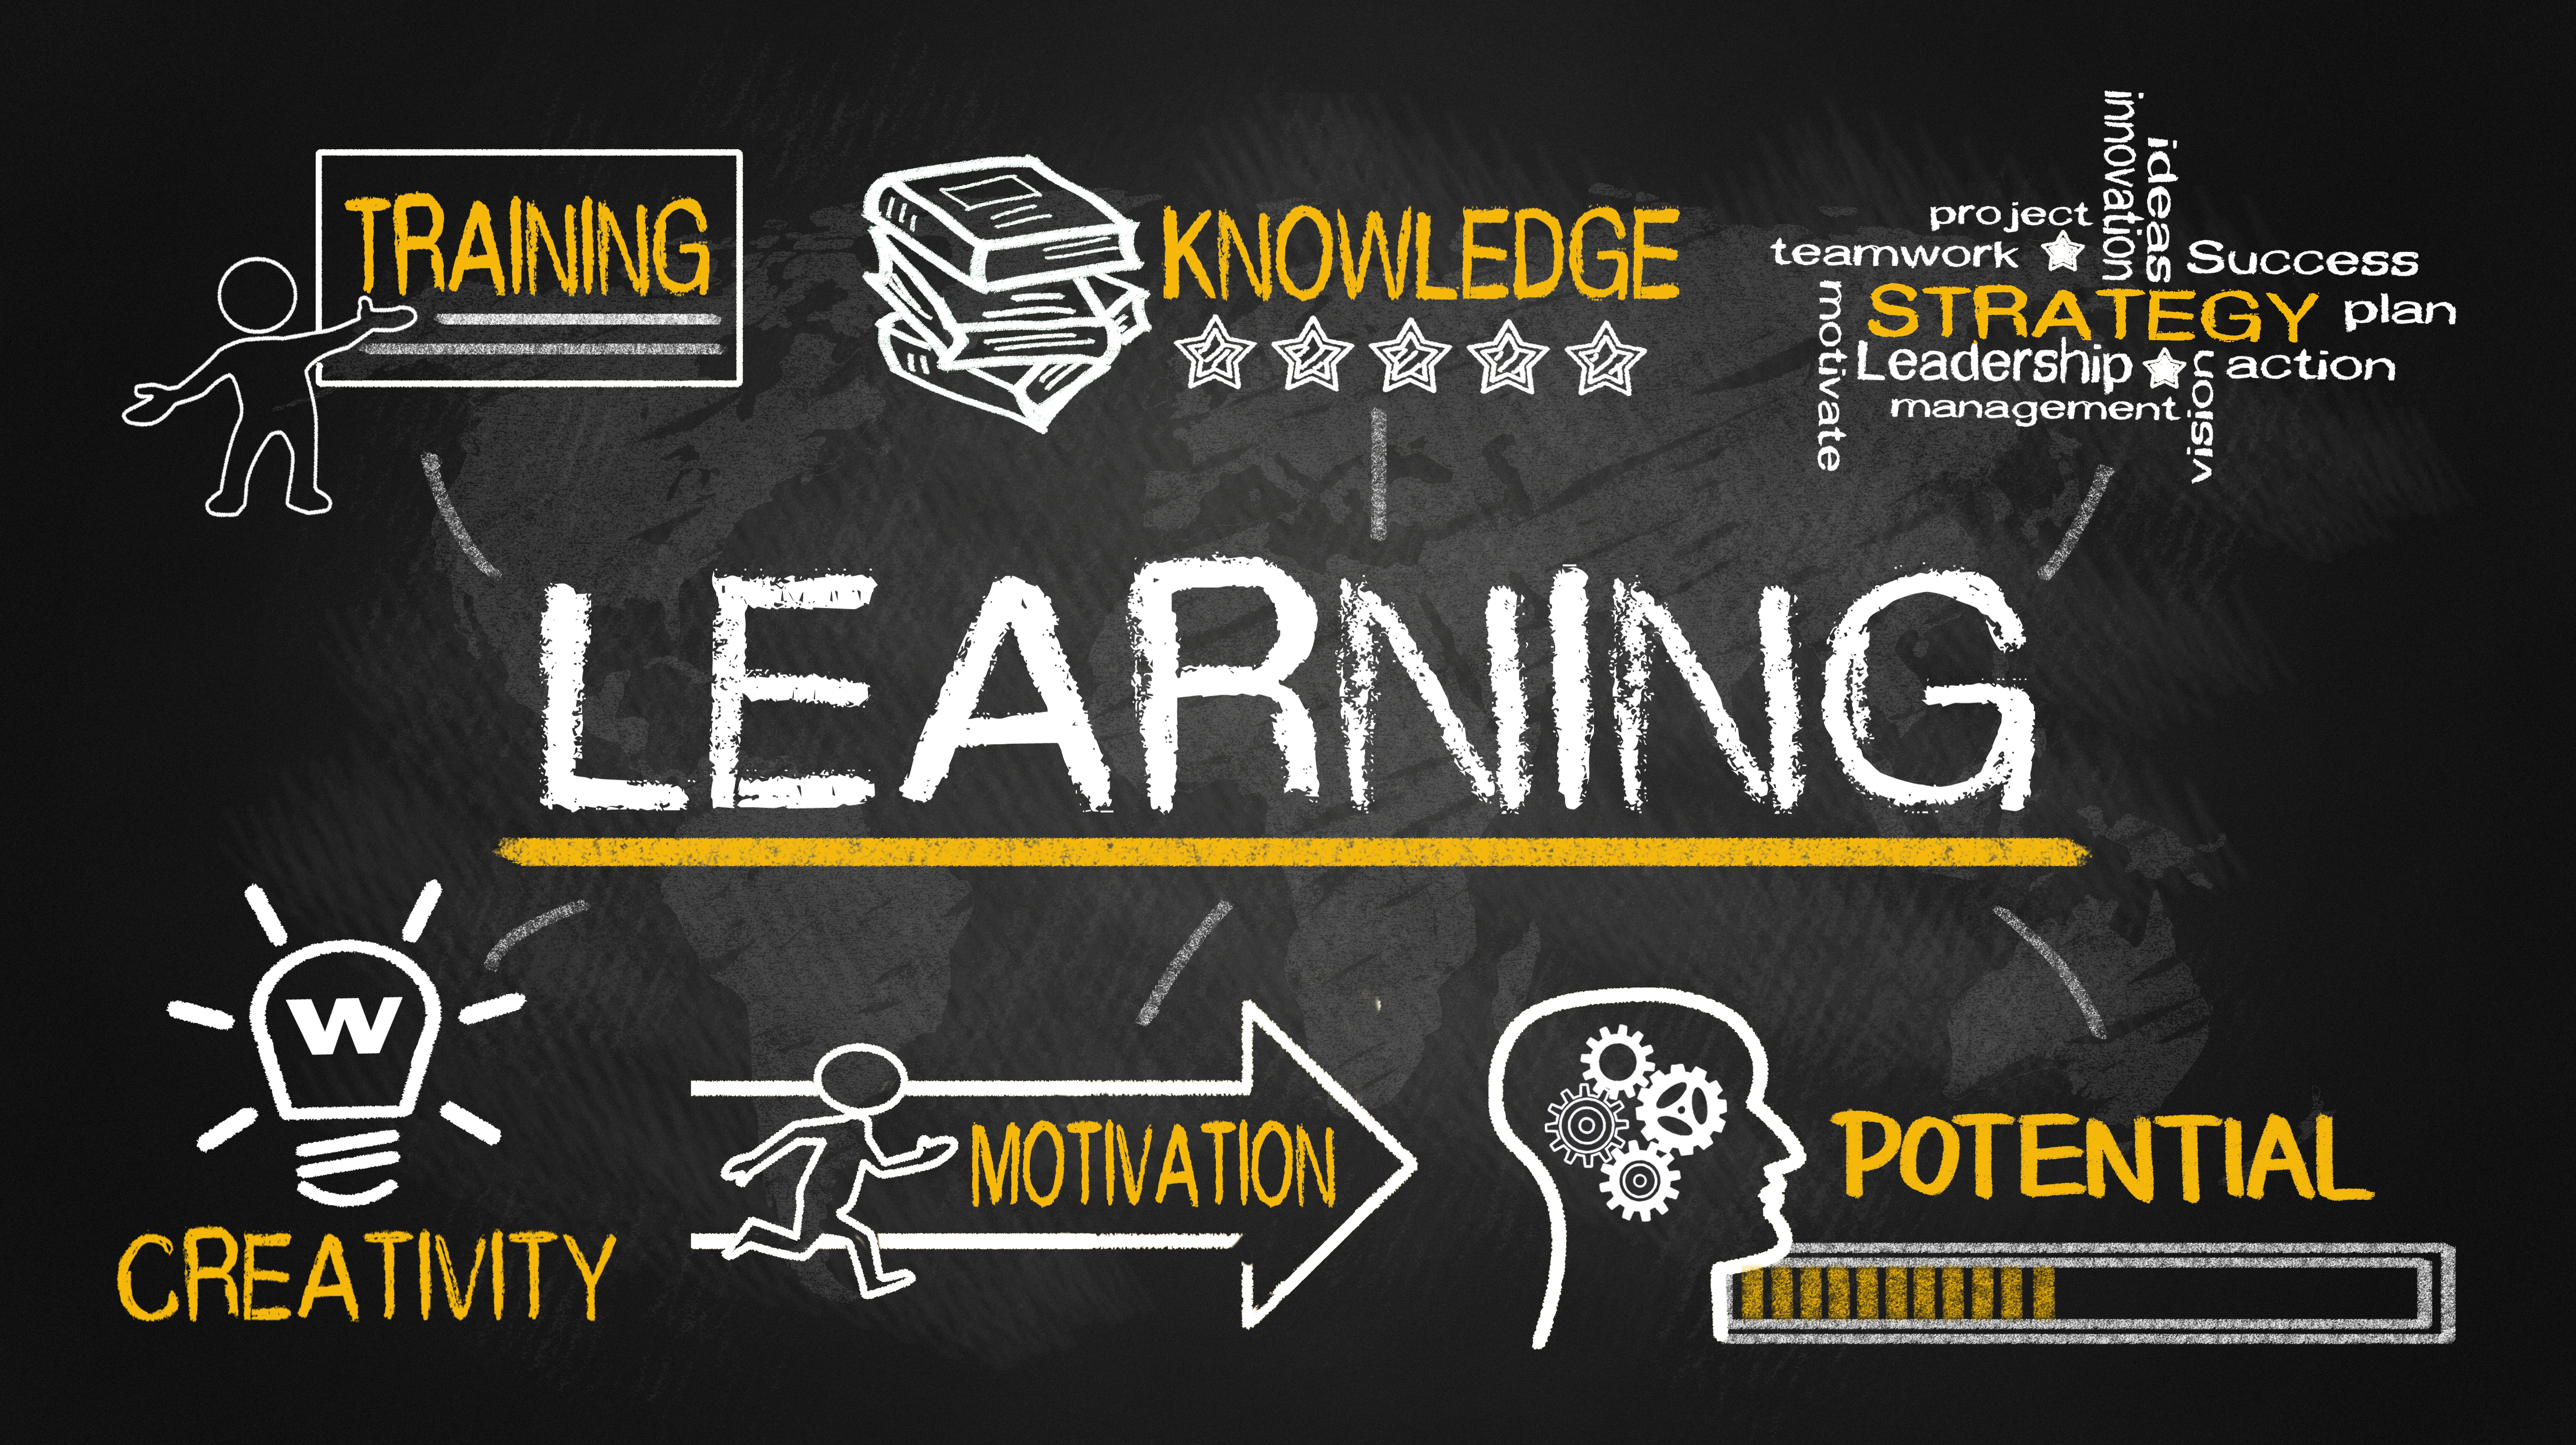 Life learning what is. Концепция lifelong Learning. Концепция lifelong Learning. Непрерывное обучение. Life Learning концепция. Learning Strategies succeeding in lifelong Learning.